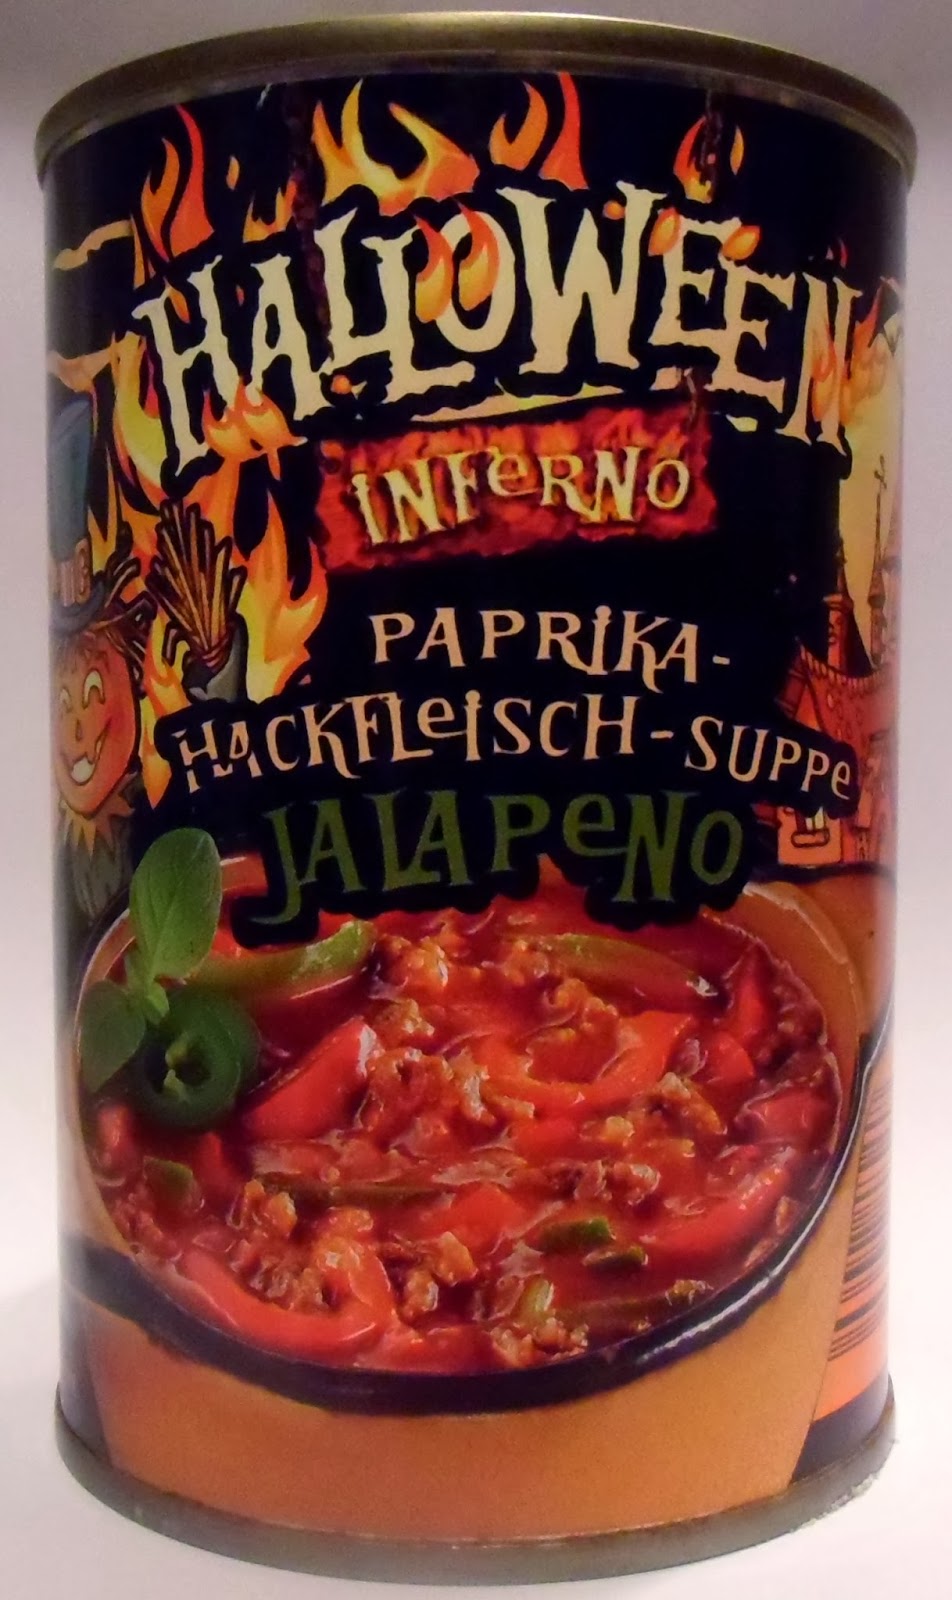 Chilihead77.de: LIDL - Halloween Inferno Paprika-Hackfleisch-Suppe Jalapeno